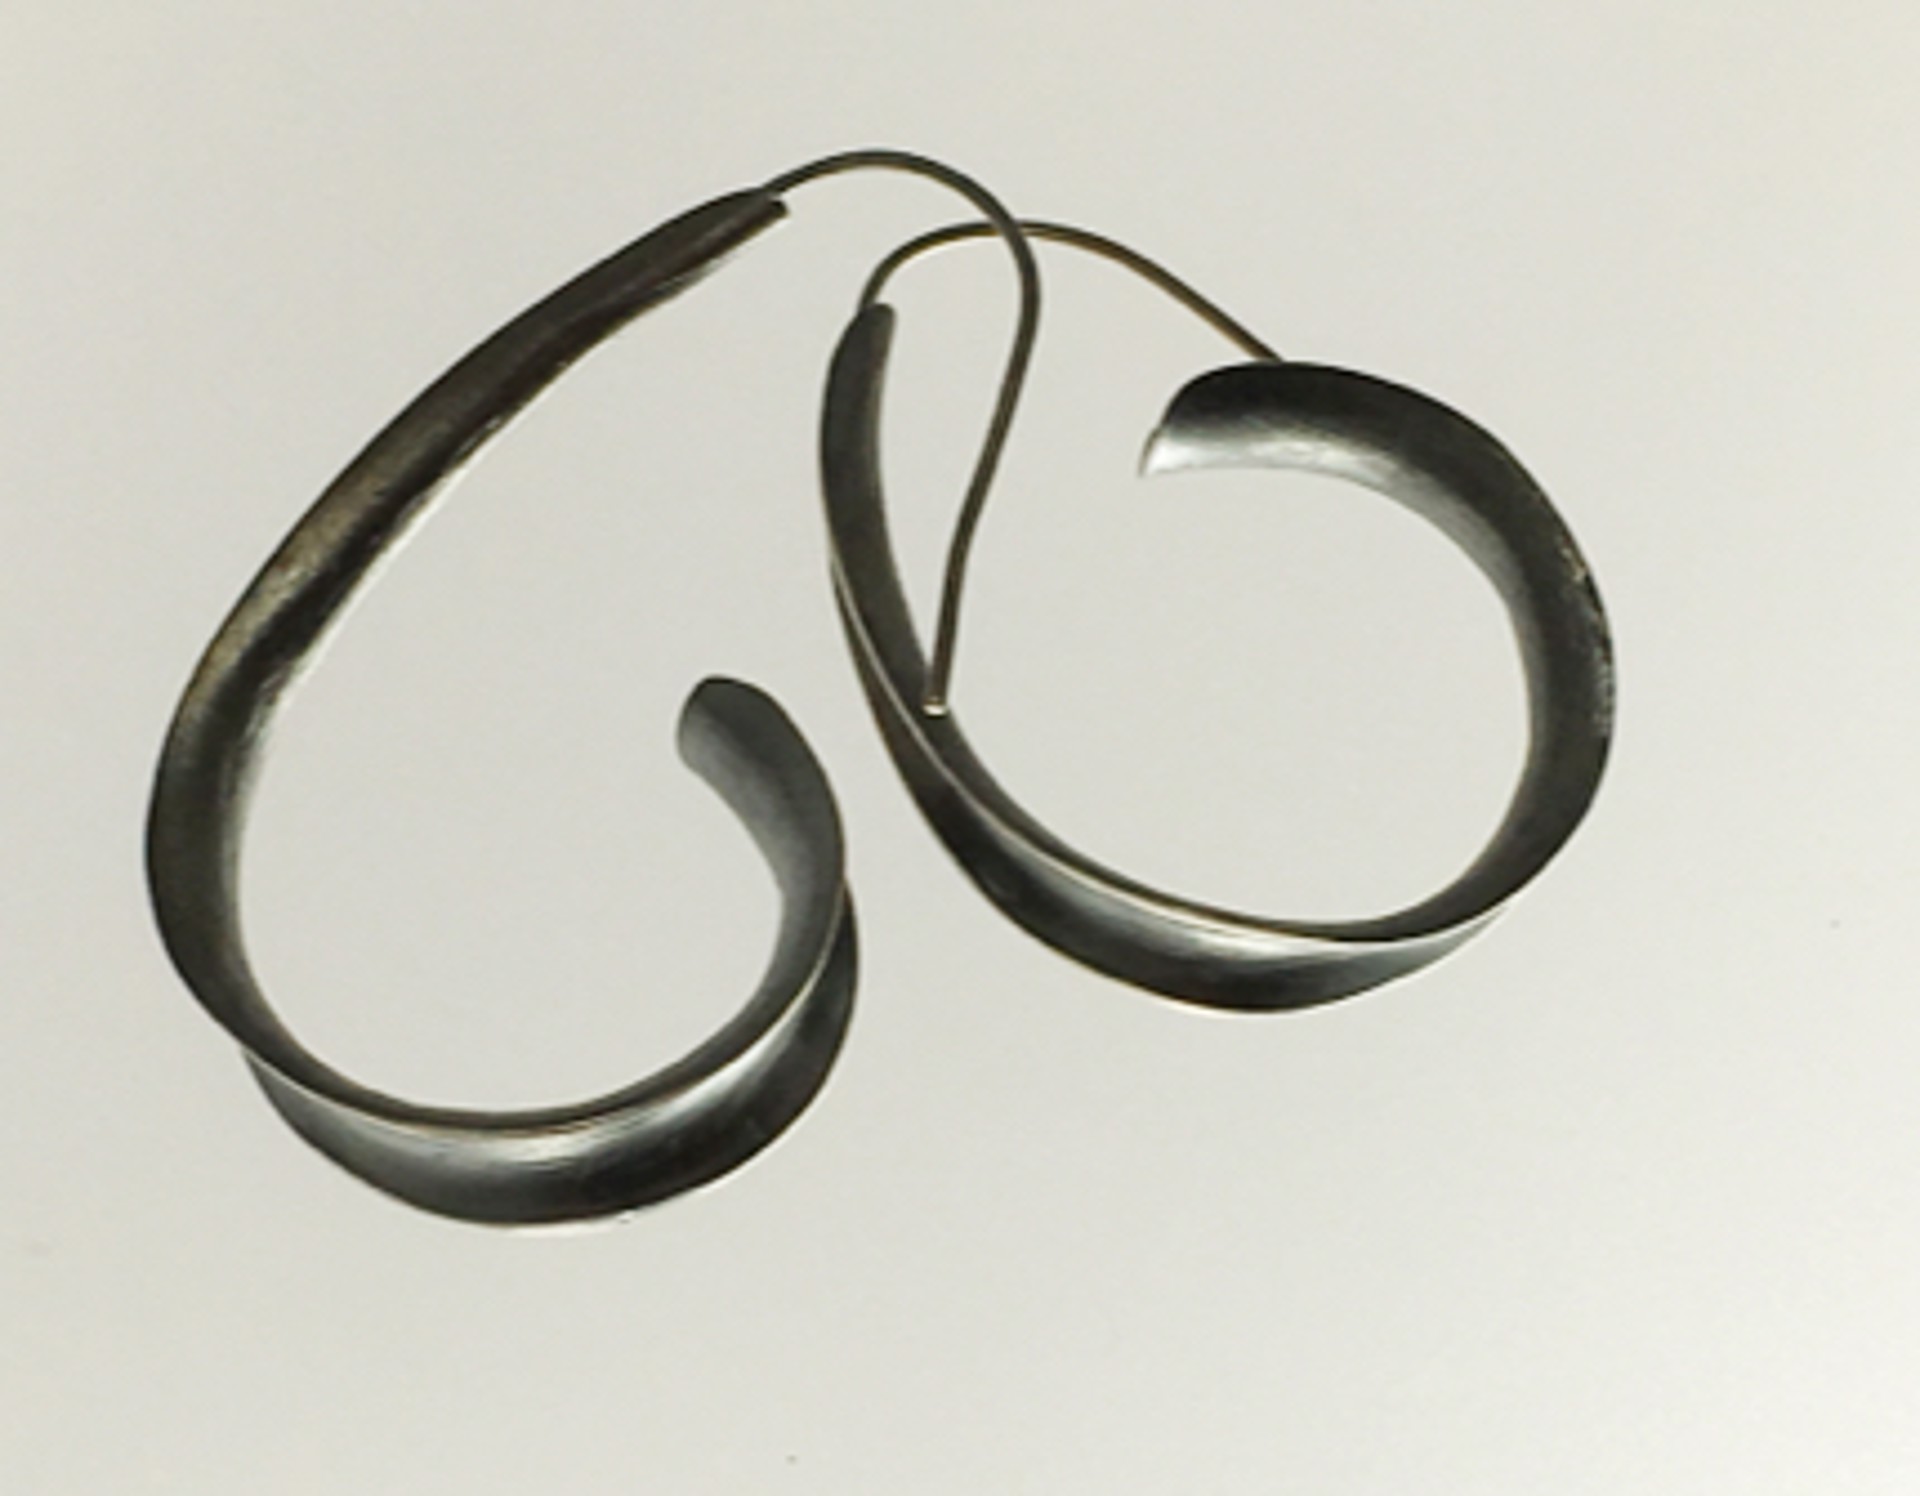 Earrings - Sterling Silver Anticlastic Hoops - Medium by Pattie Parkhurst